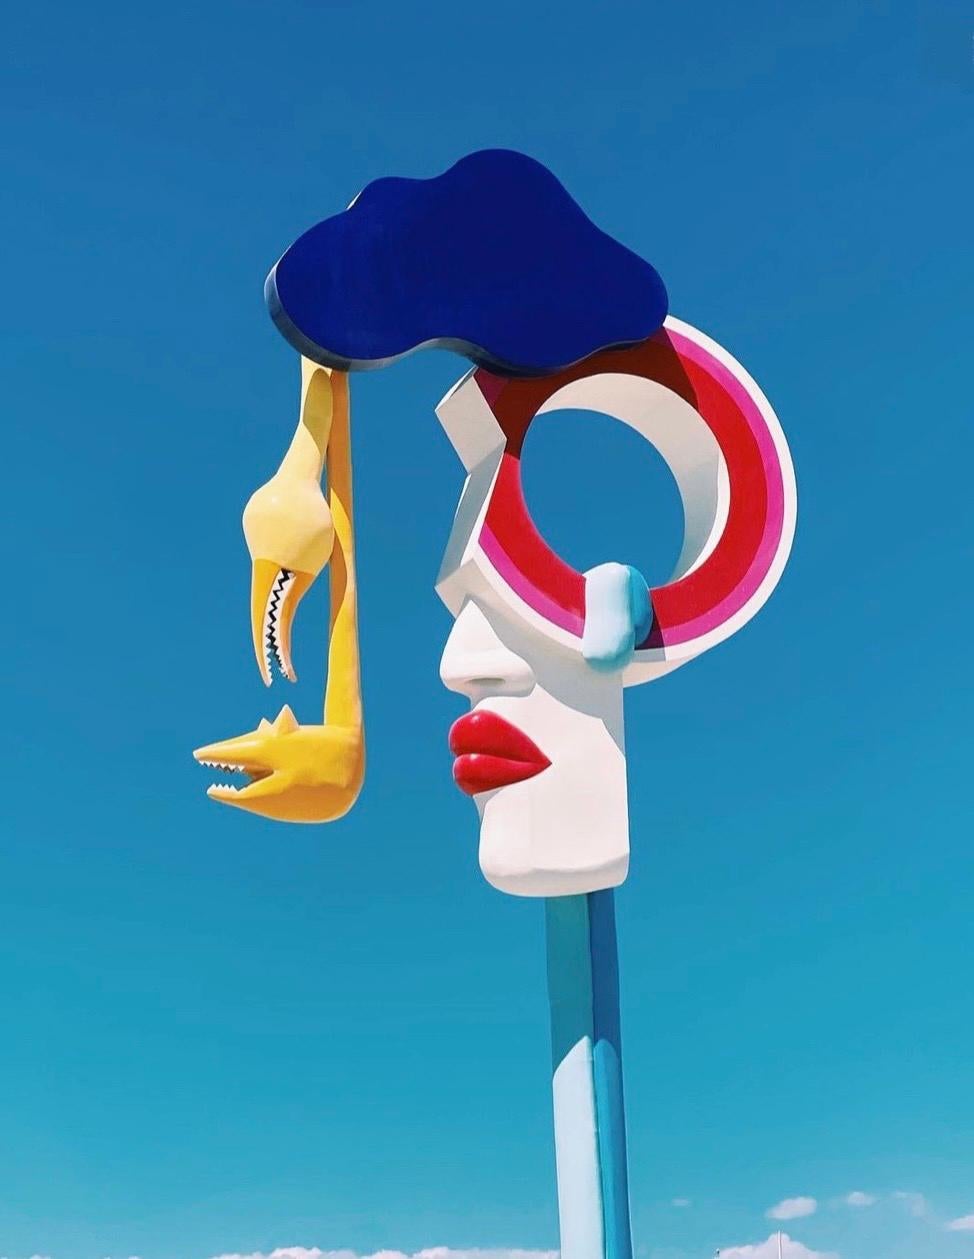 The Mind's Eye - Sculpture by Launa Eddy